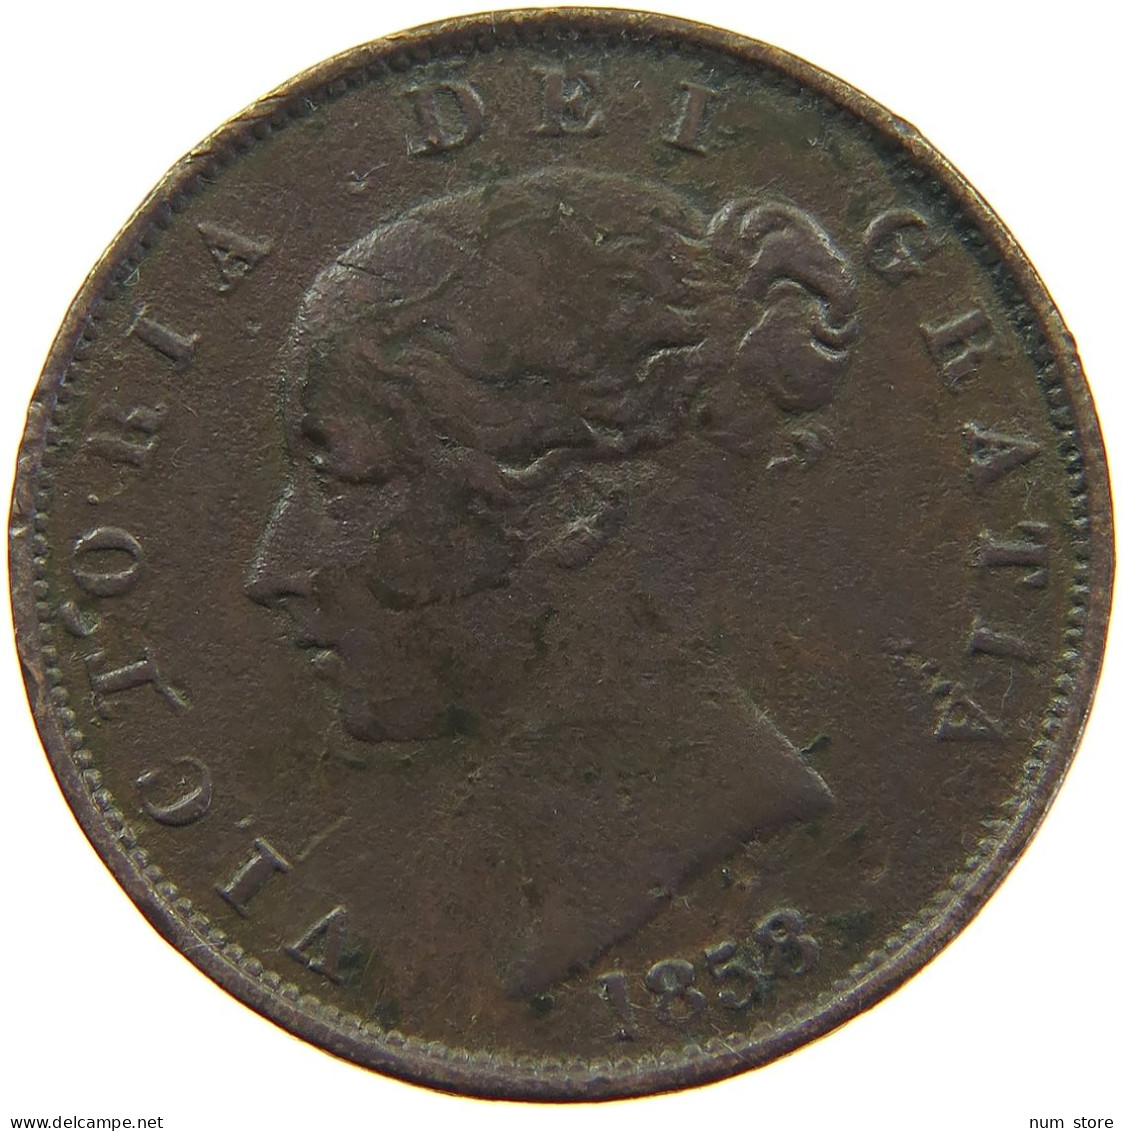 GREAT BRITAIN HALFPENNY 1858 Victoria 1837-1901 #s010 0265 - C. 1/2 Penny